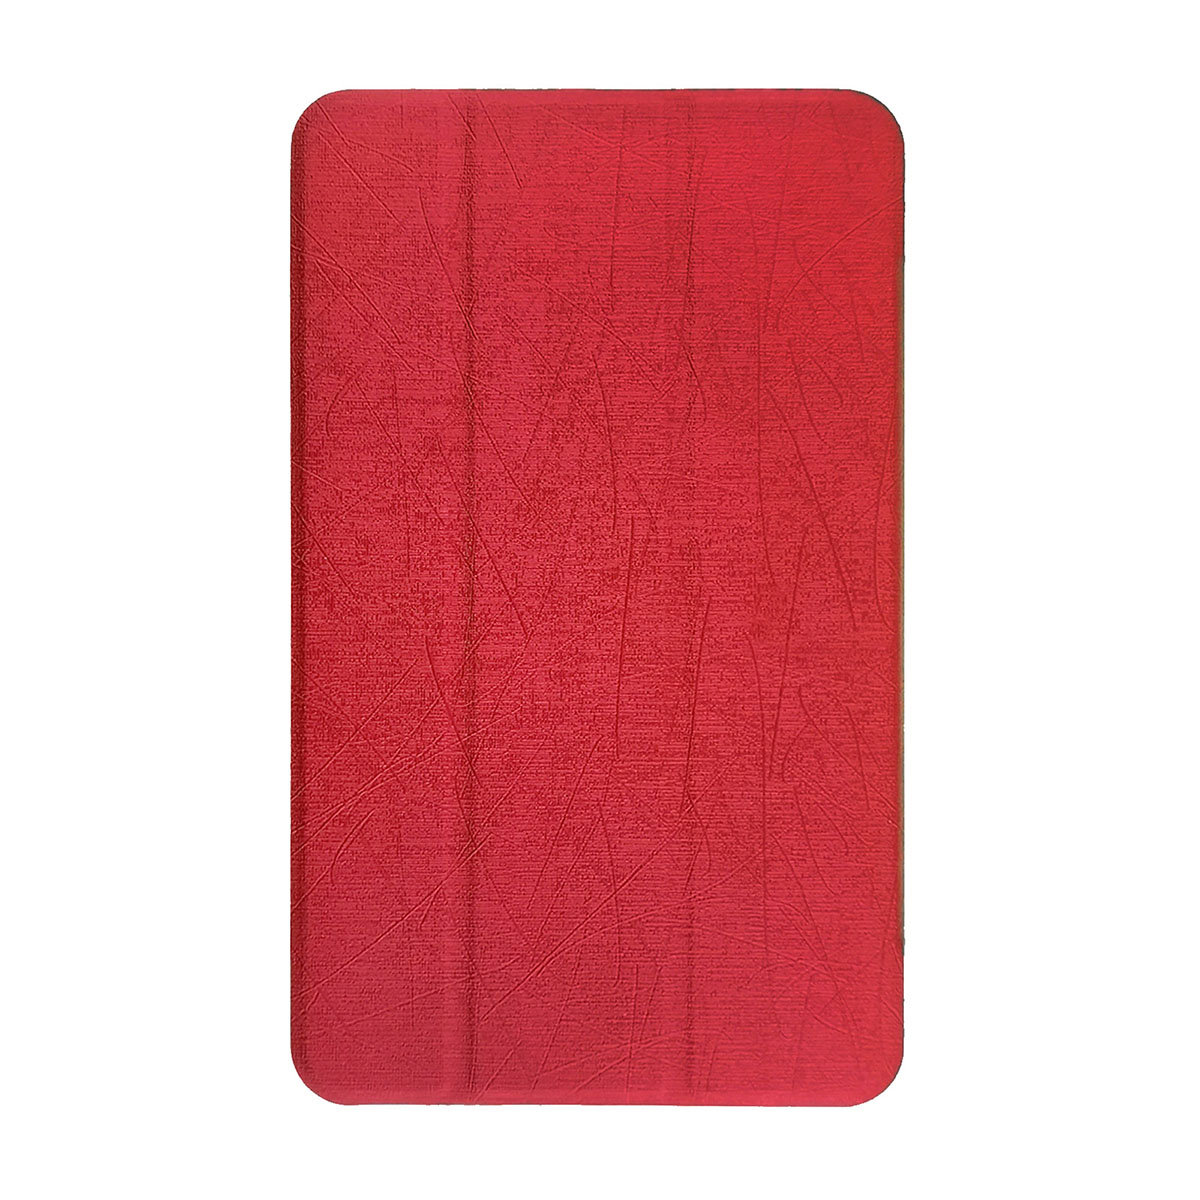 Чехол Folio Cover для SAMSUNG Galaxy Tab E 8.0 (SM-T377), цвет красный.